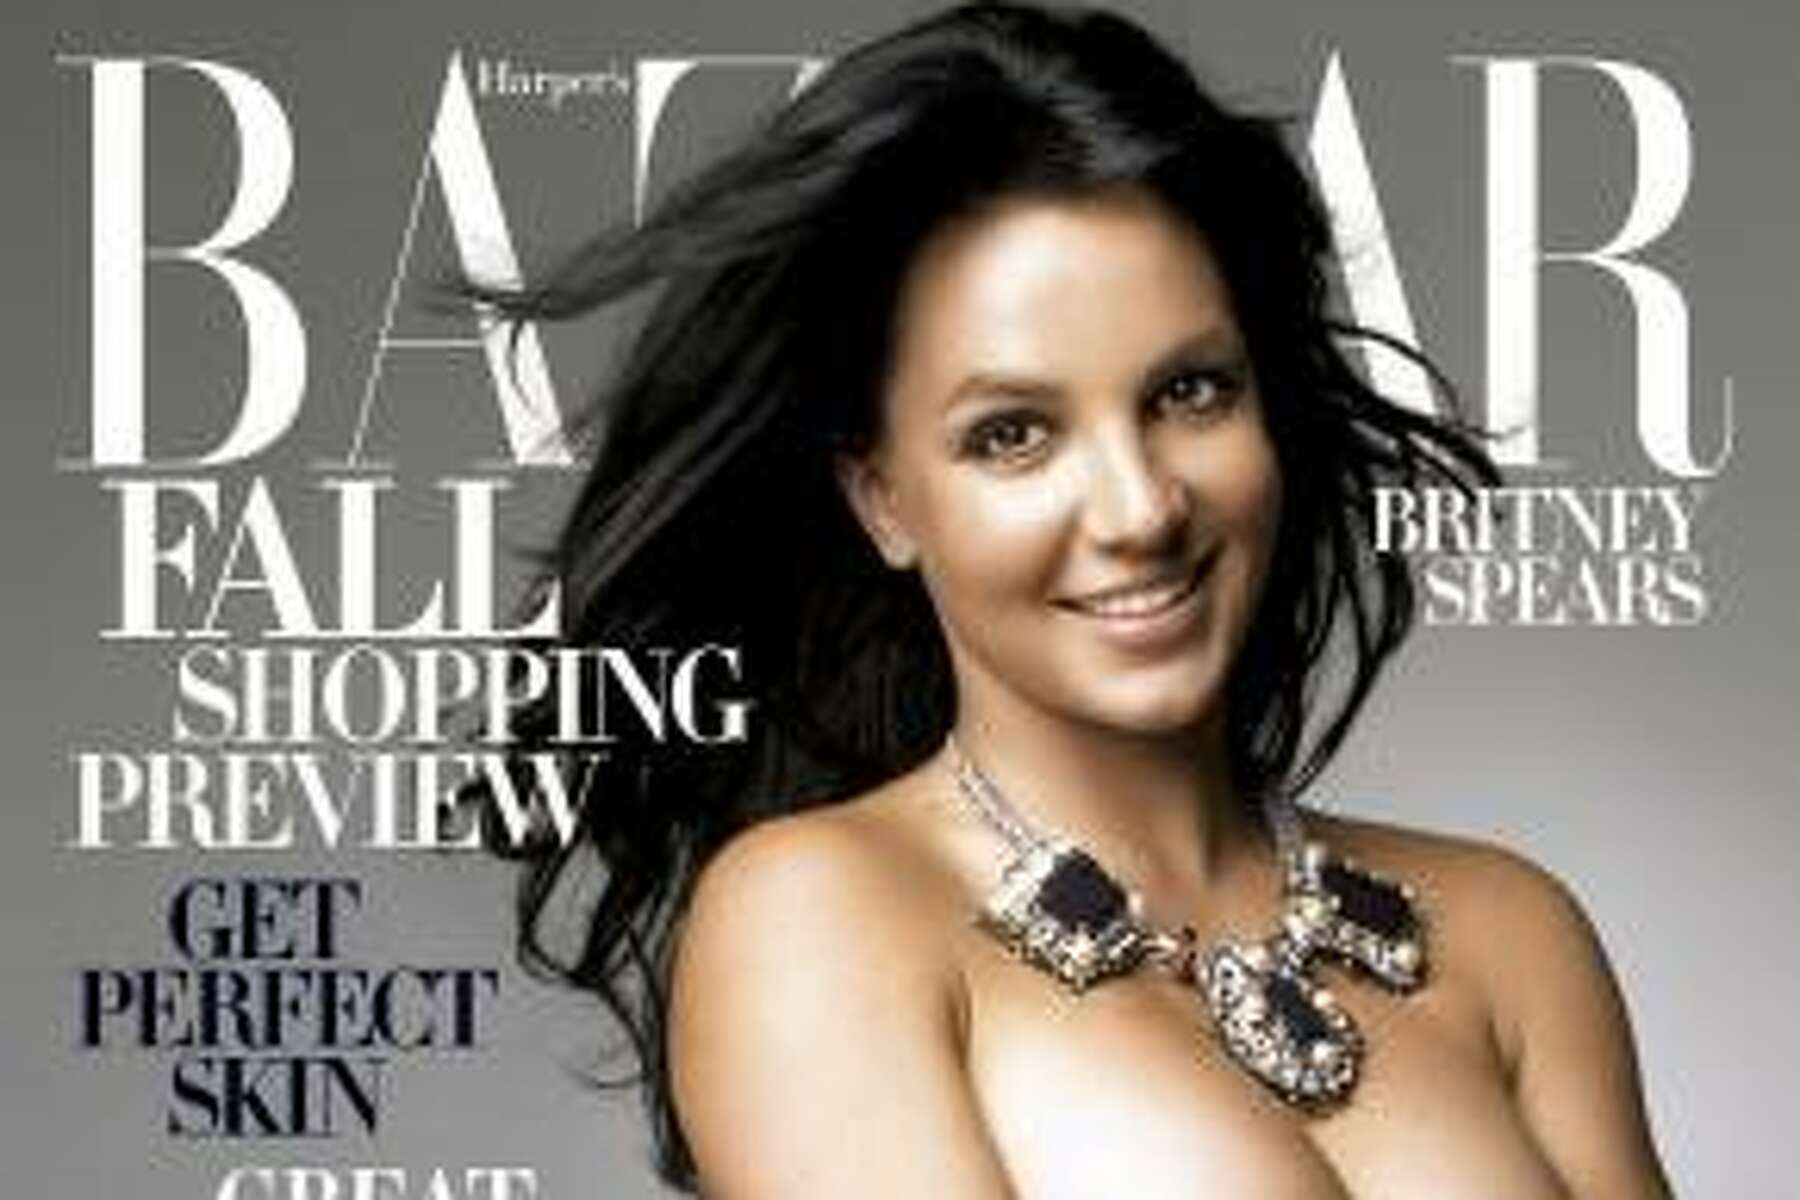 Britney Spears Pregnant Naked - Pregnant Spears poses nude for Harper's Bazaar cover